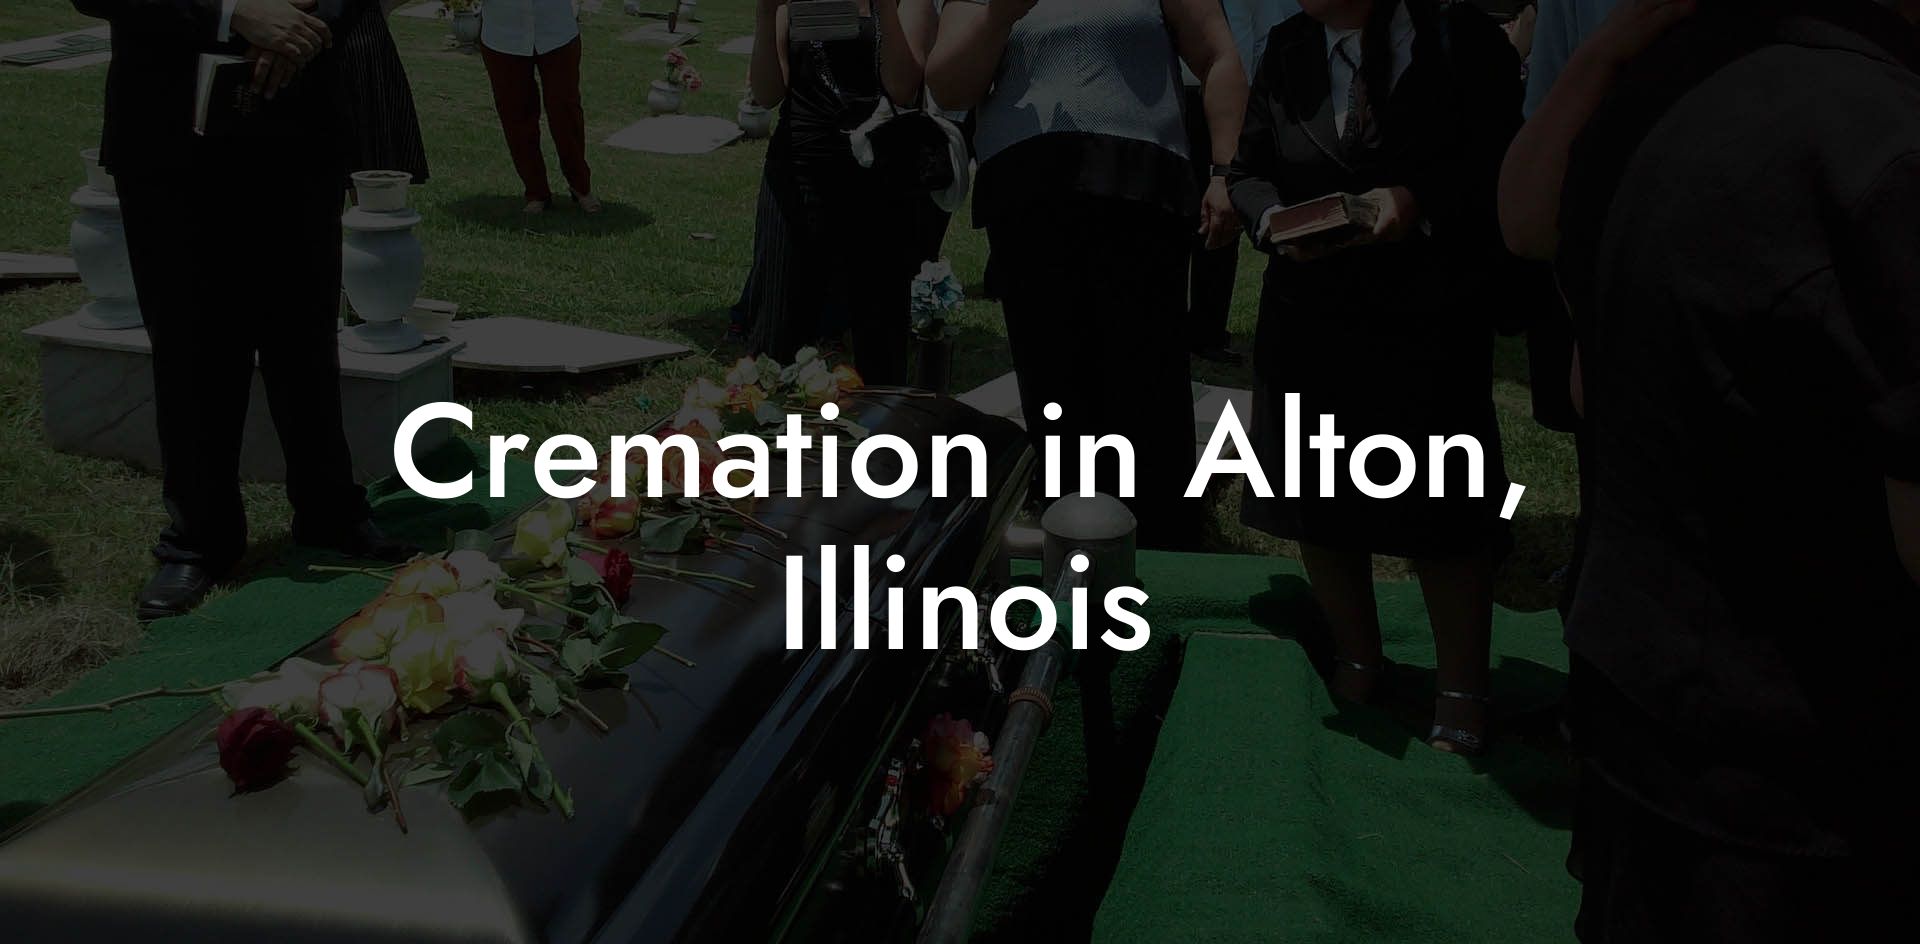 Cremation in Alton, Illinois